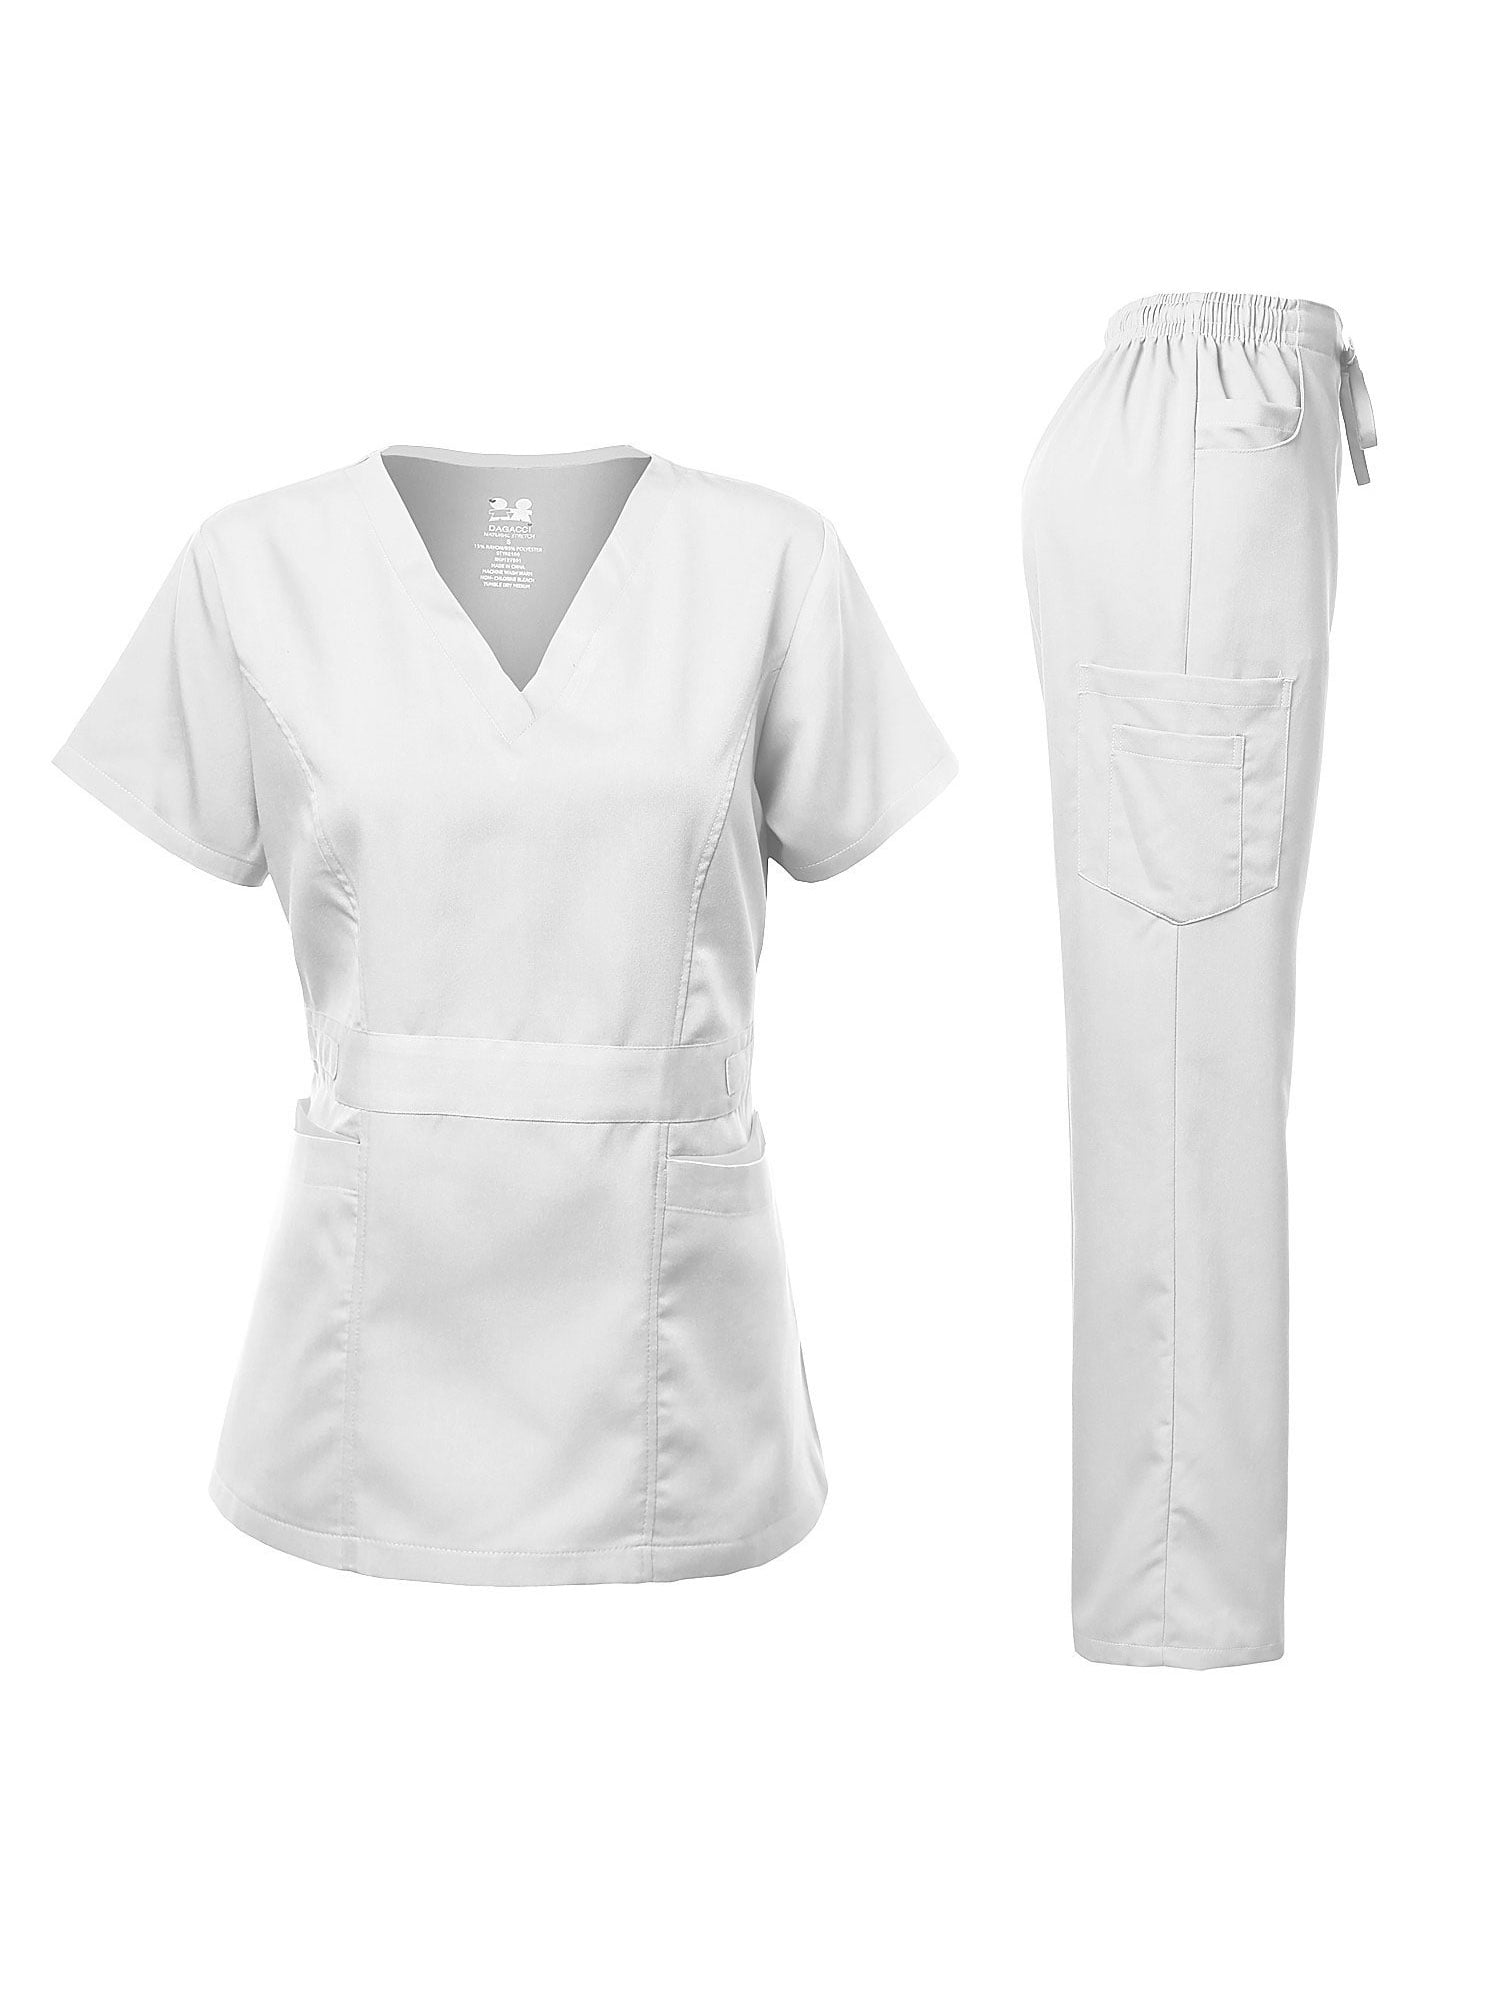 Dagacci Medical Uniform Women's Scrub Set Stretch Contrast Binding Top and Pants 